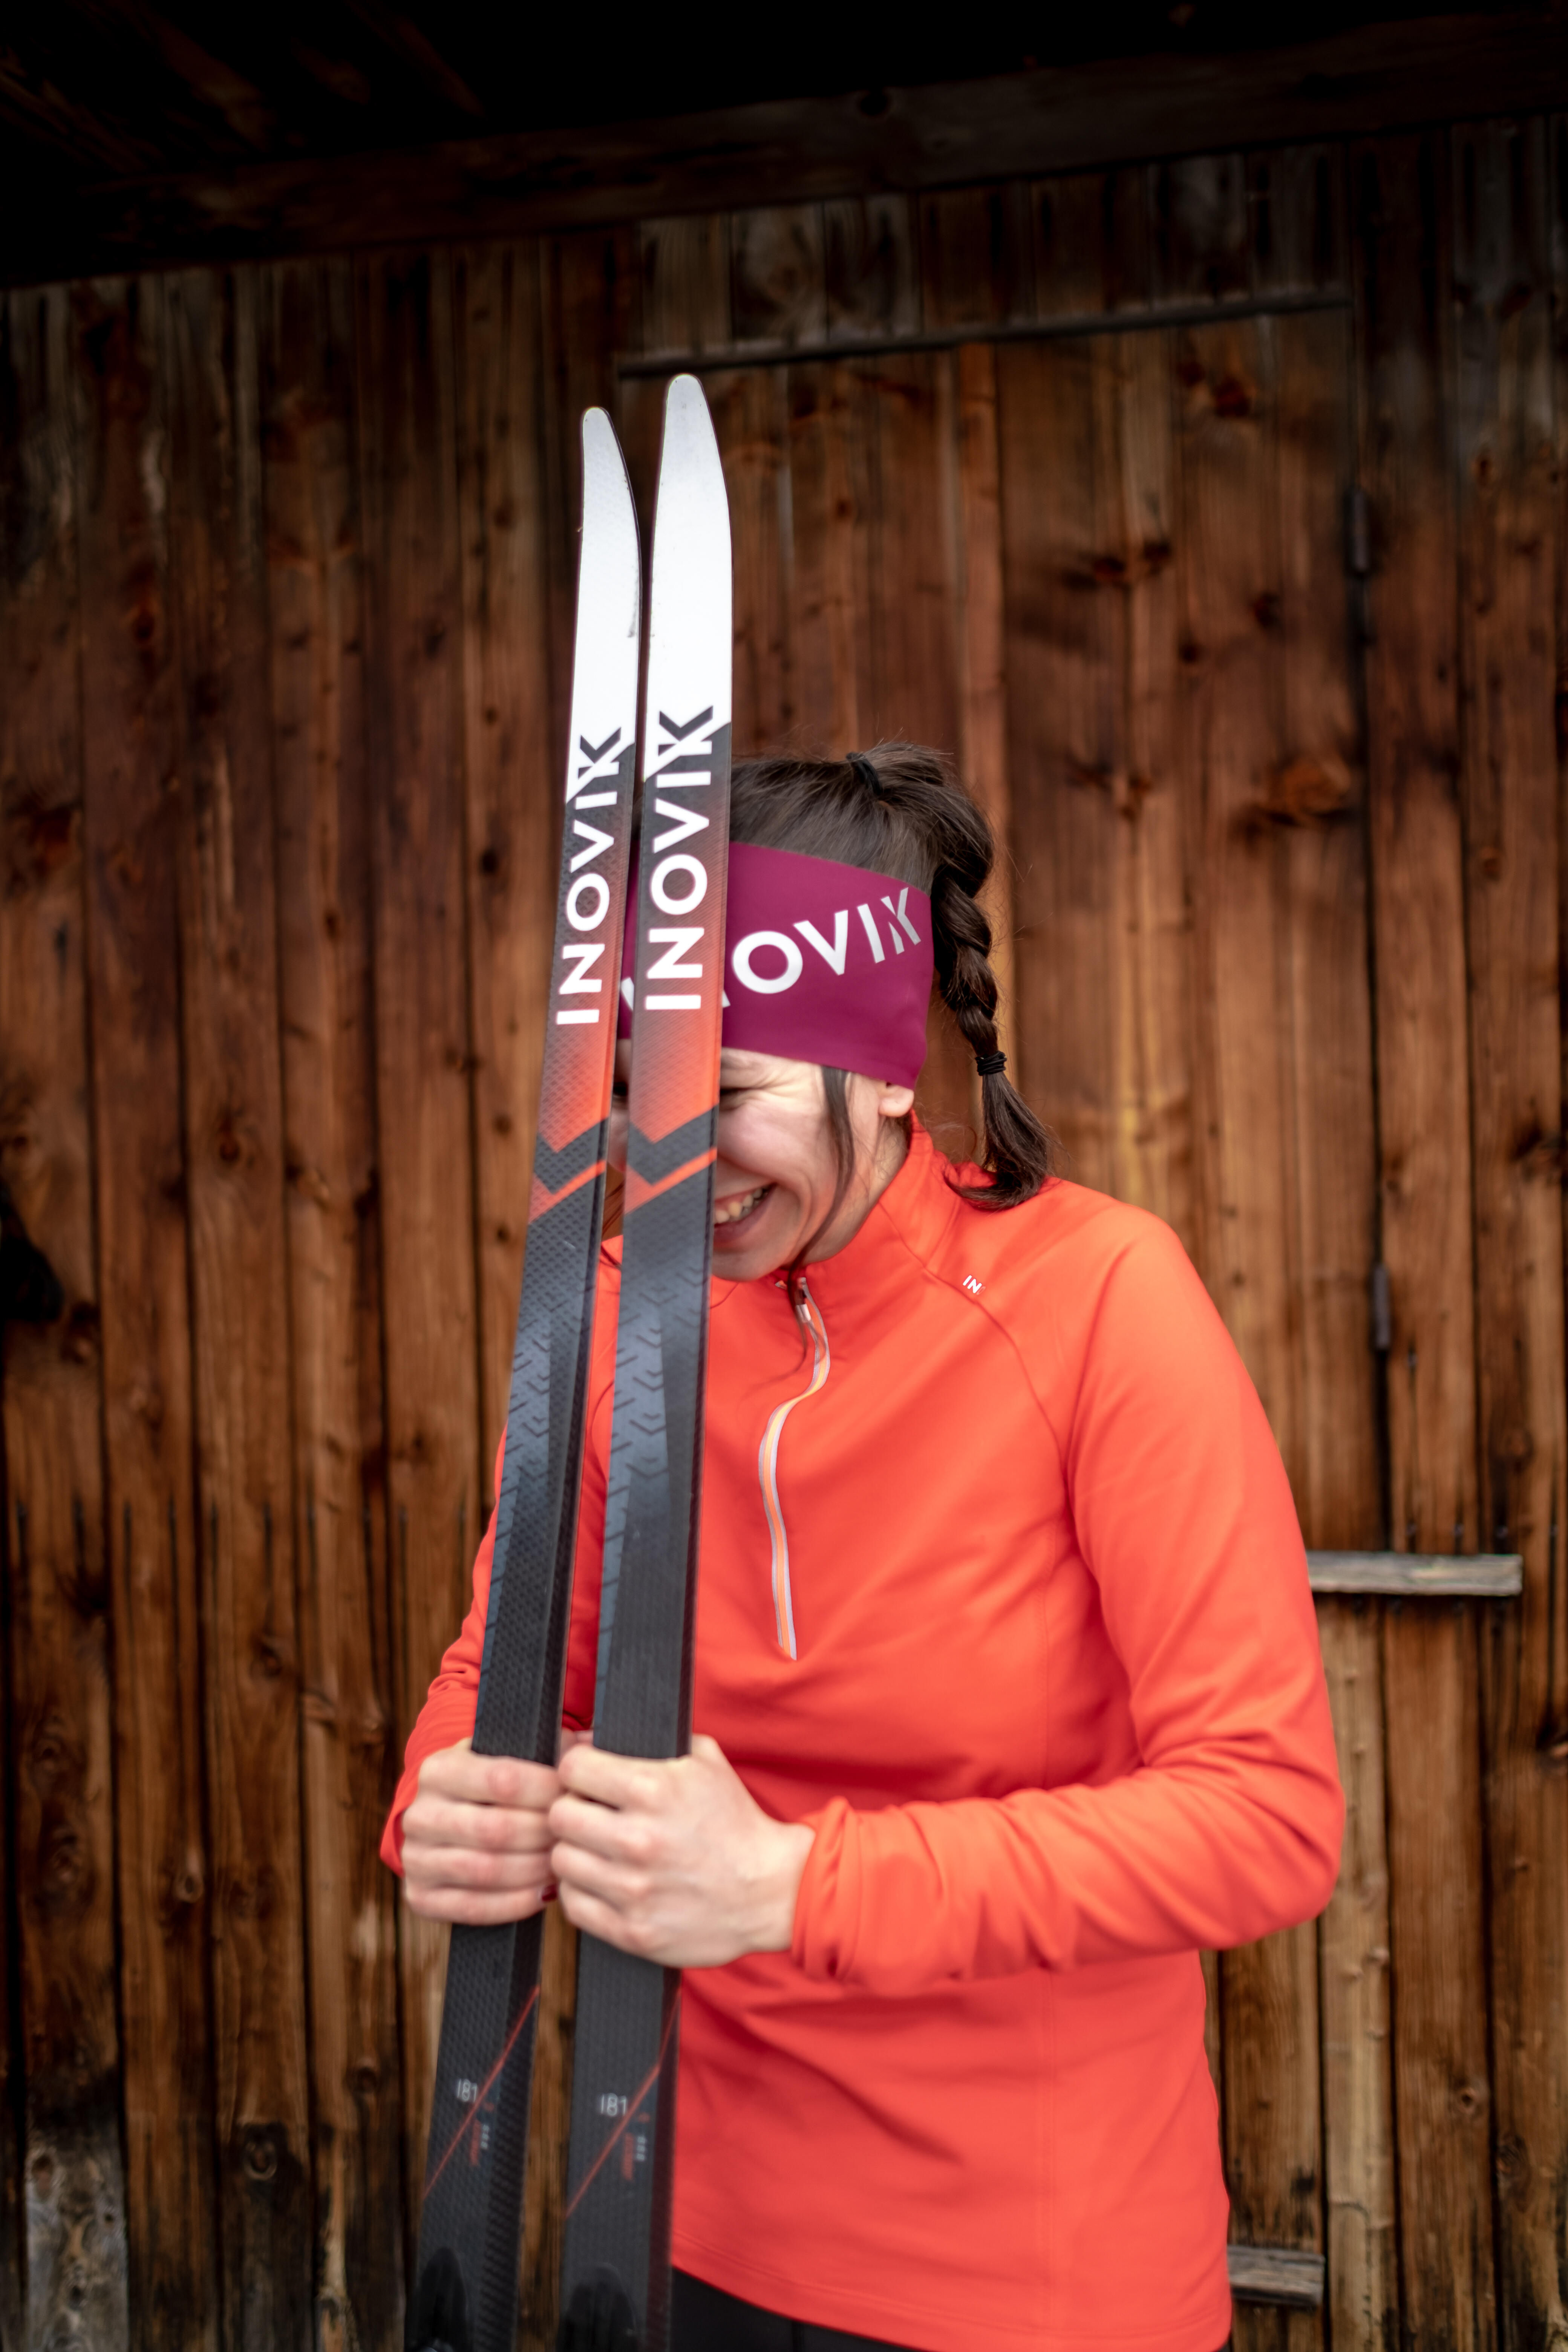 Women's Cross-Country Ski Jacket - 550 - black - Inovik - Decathlon